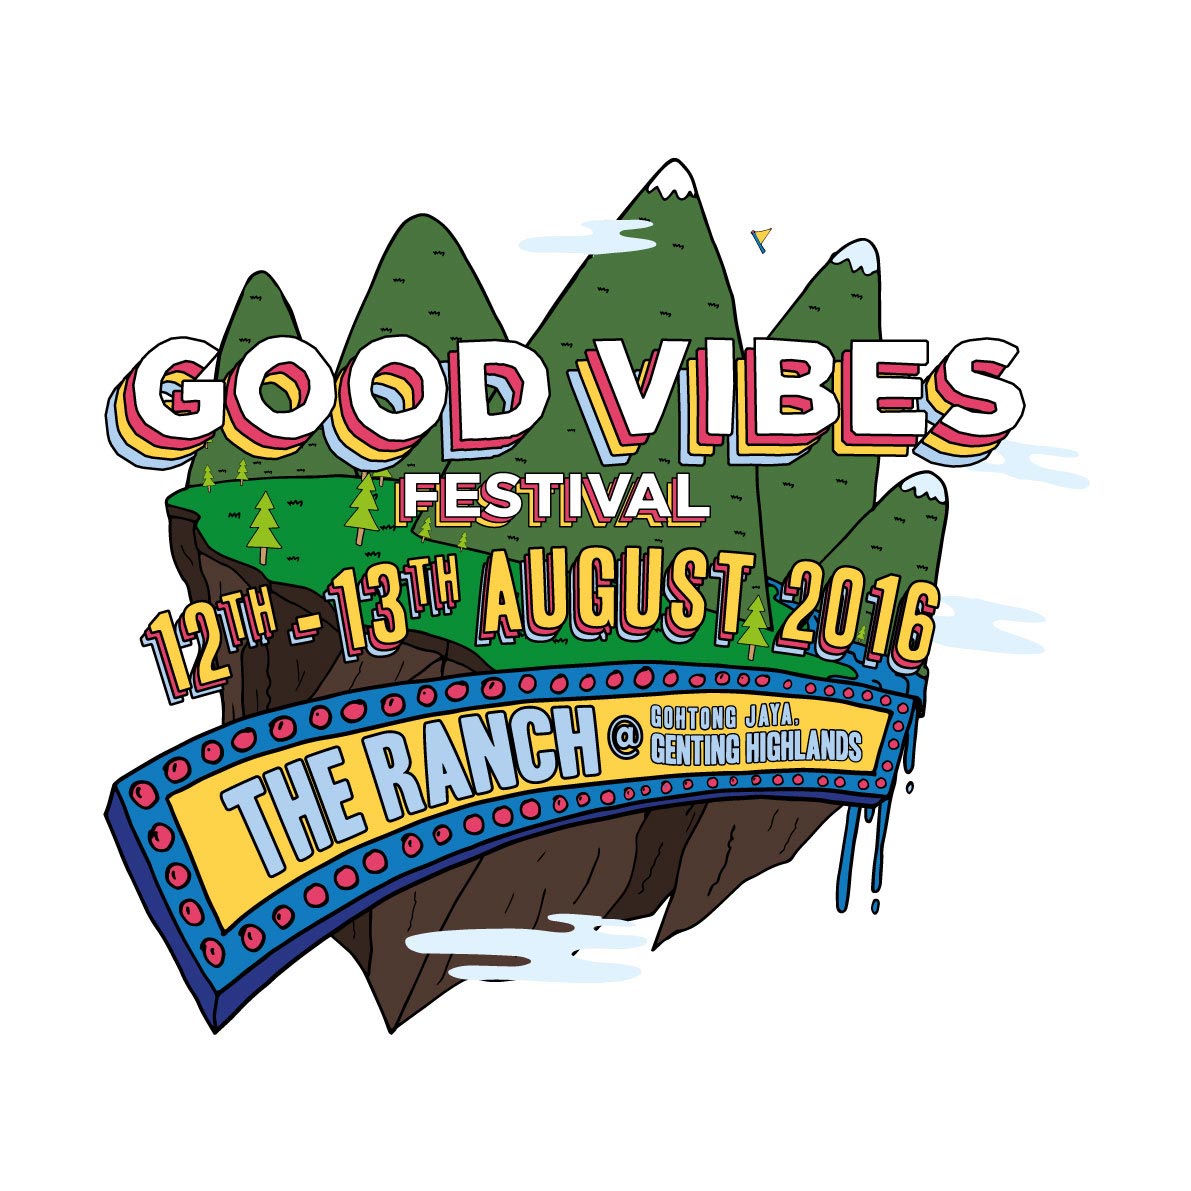 source: Good Vibes Festival